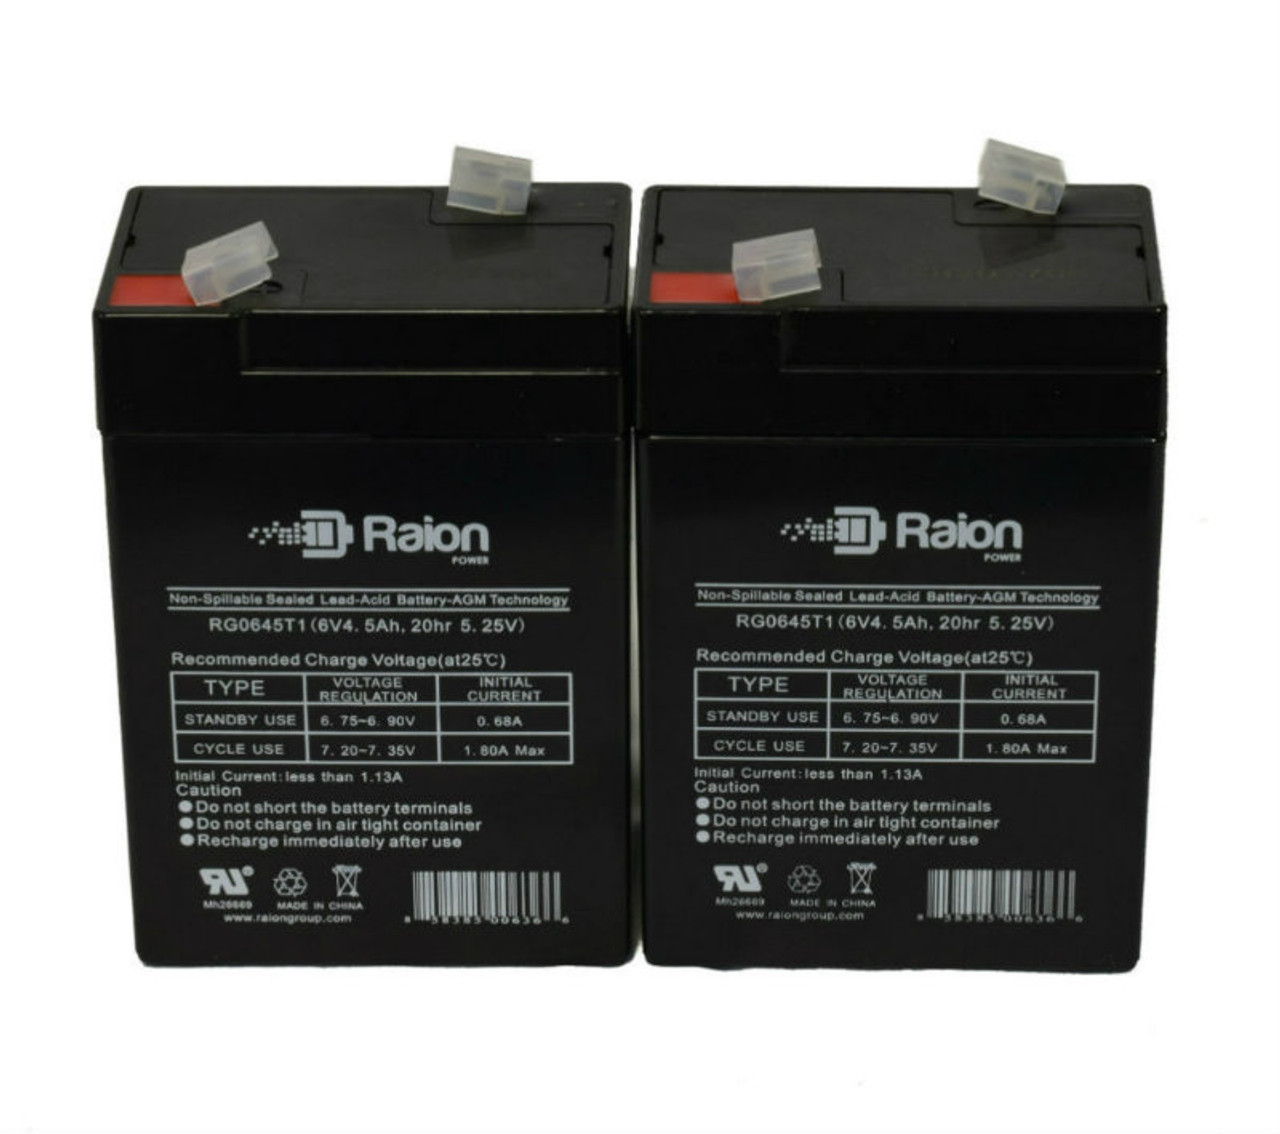 Raion Power 6V 4.5Ah Replacement Emergency Light Battery for Elite E401 - 2 Pack